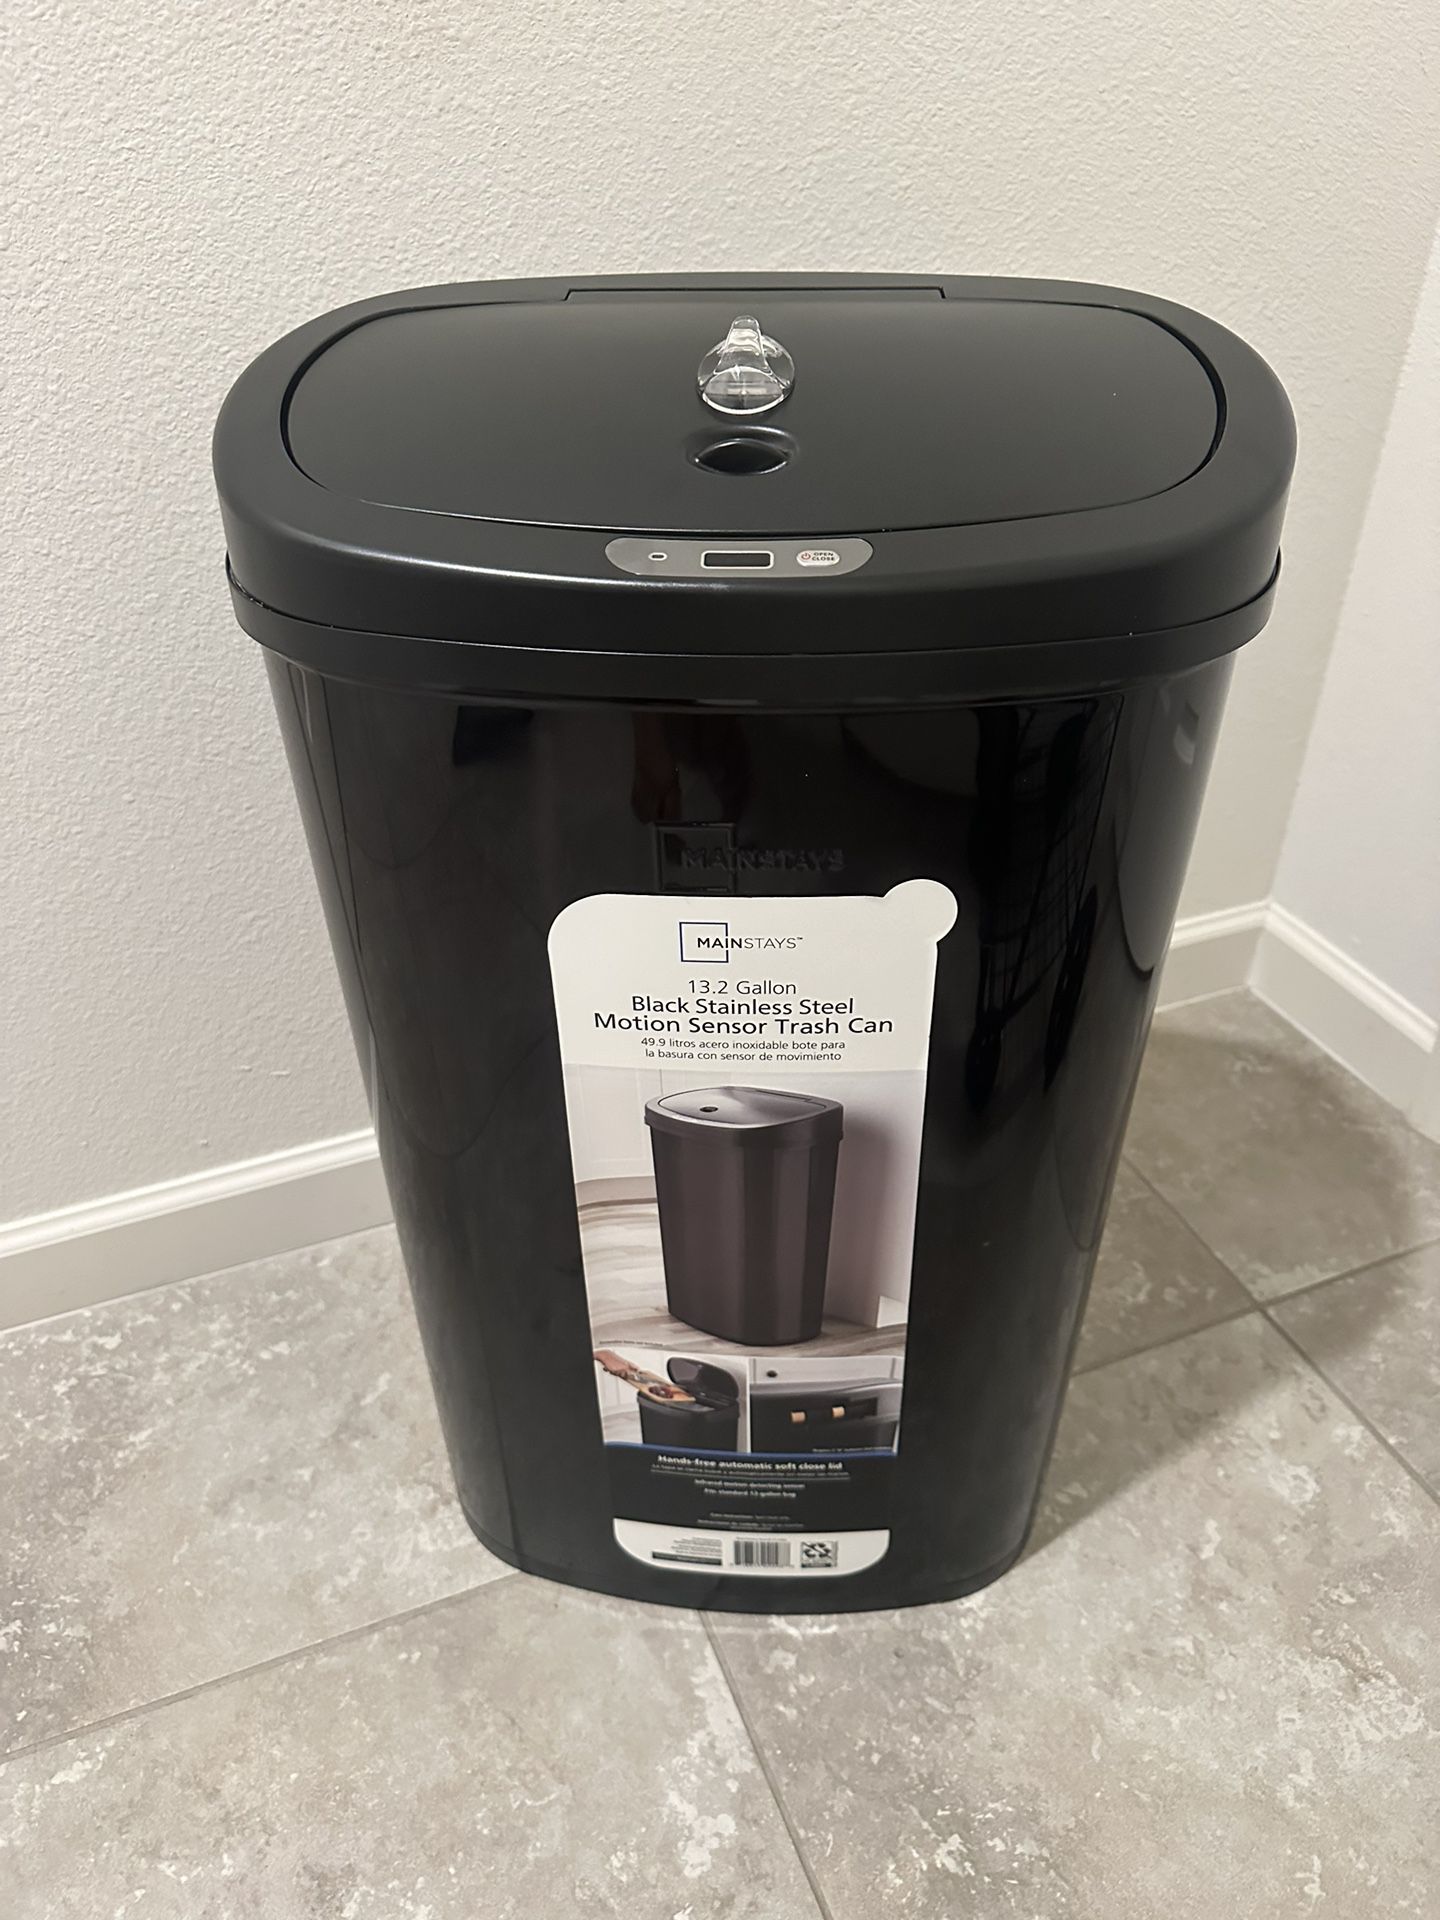 Nine Stars 13.2 Gallon Trash Can, Motion Sensor Kitchen Trash Can, Black Stainless Steel